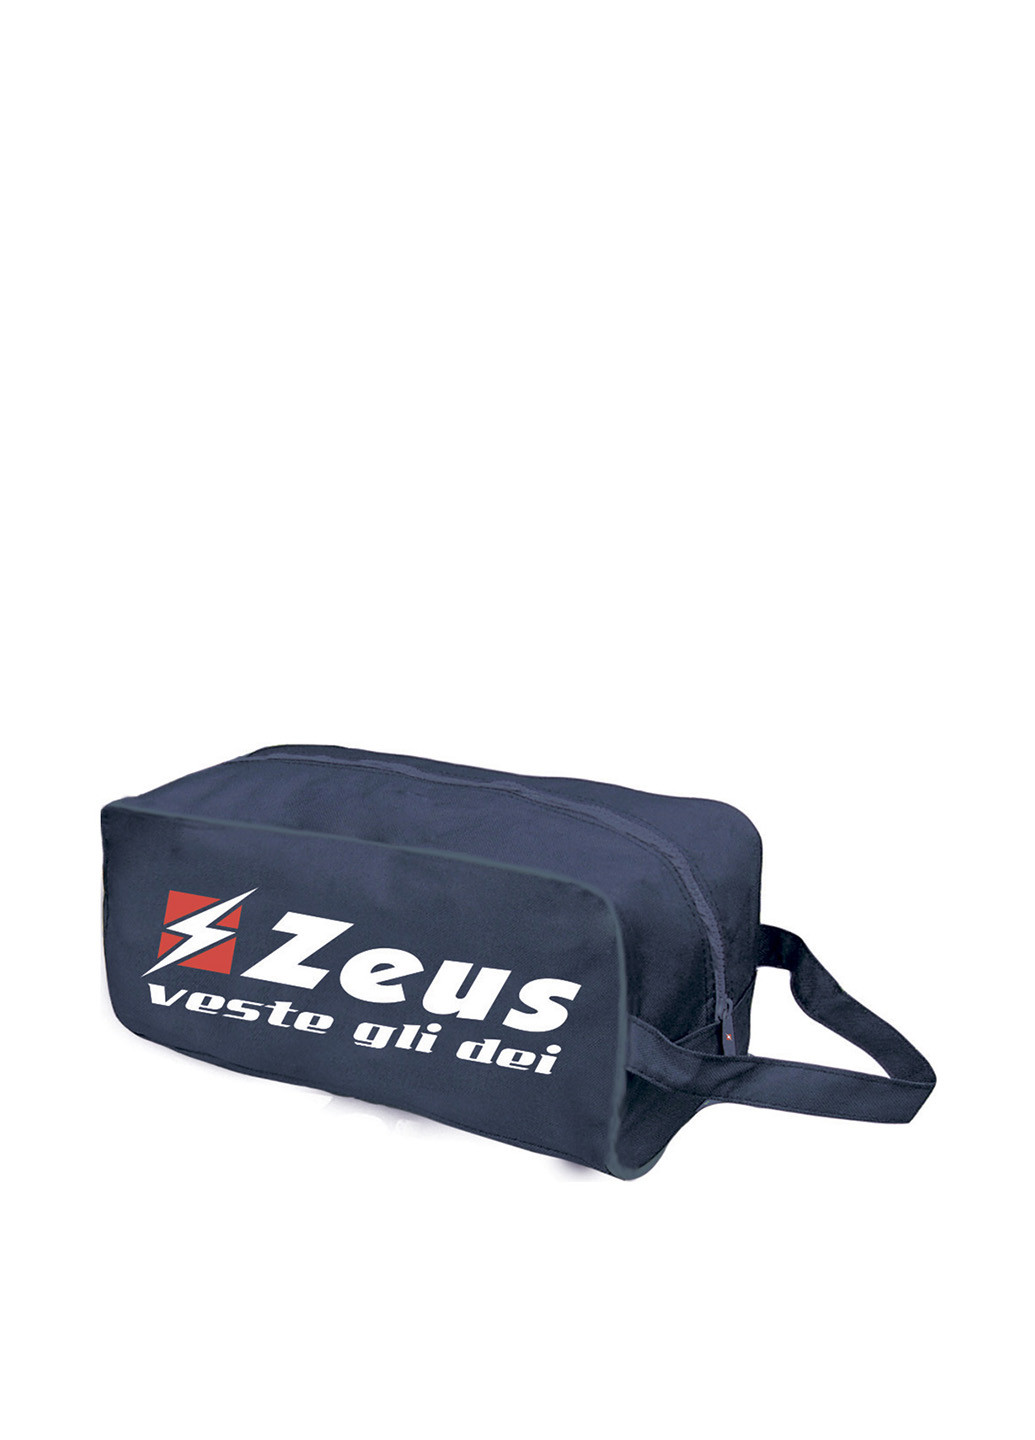 Сумка Zeus сумка-корзина логотип джинсовая спортивная